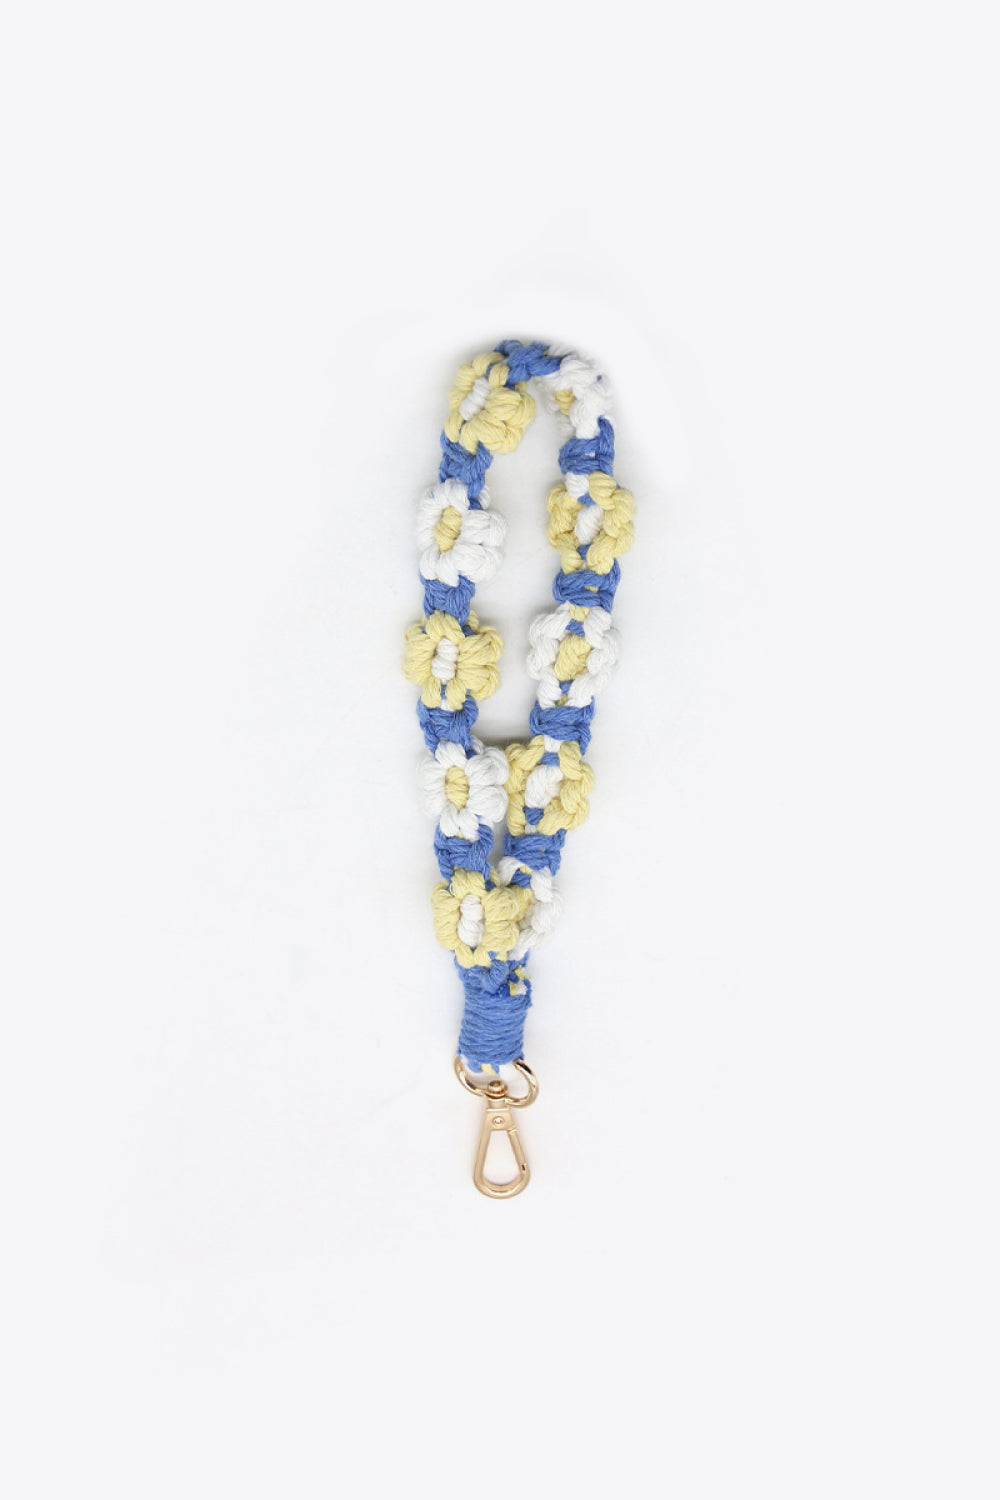 Trendsi Cupid Beauty Supplies Yellow/Blue / One Size Keychains Assorted 4-Piece Macrame Flower Keychain